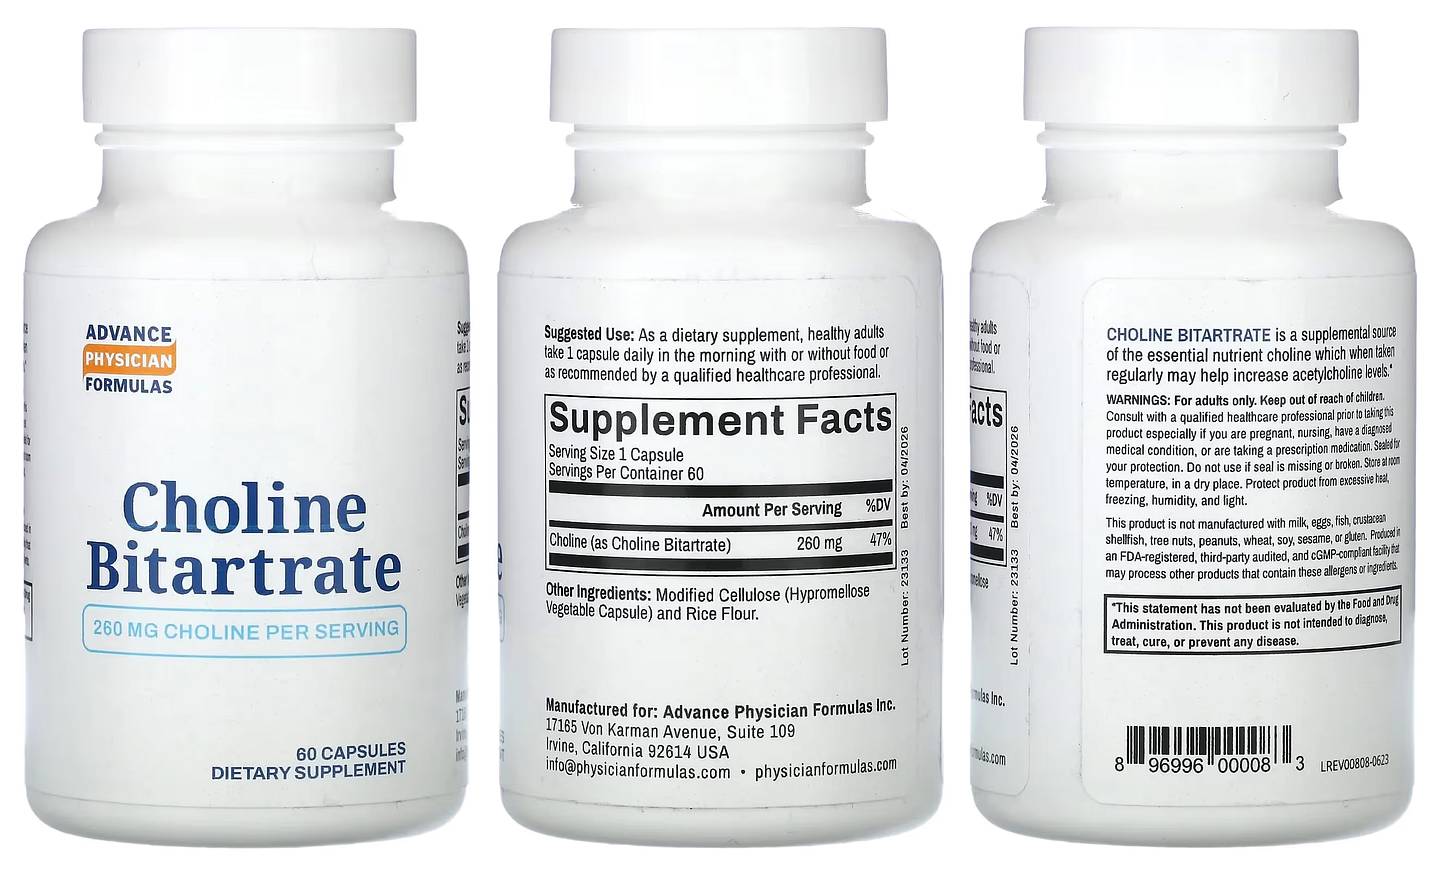 Advance Physician Formulas, Choline Bitartrate packaging